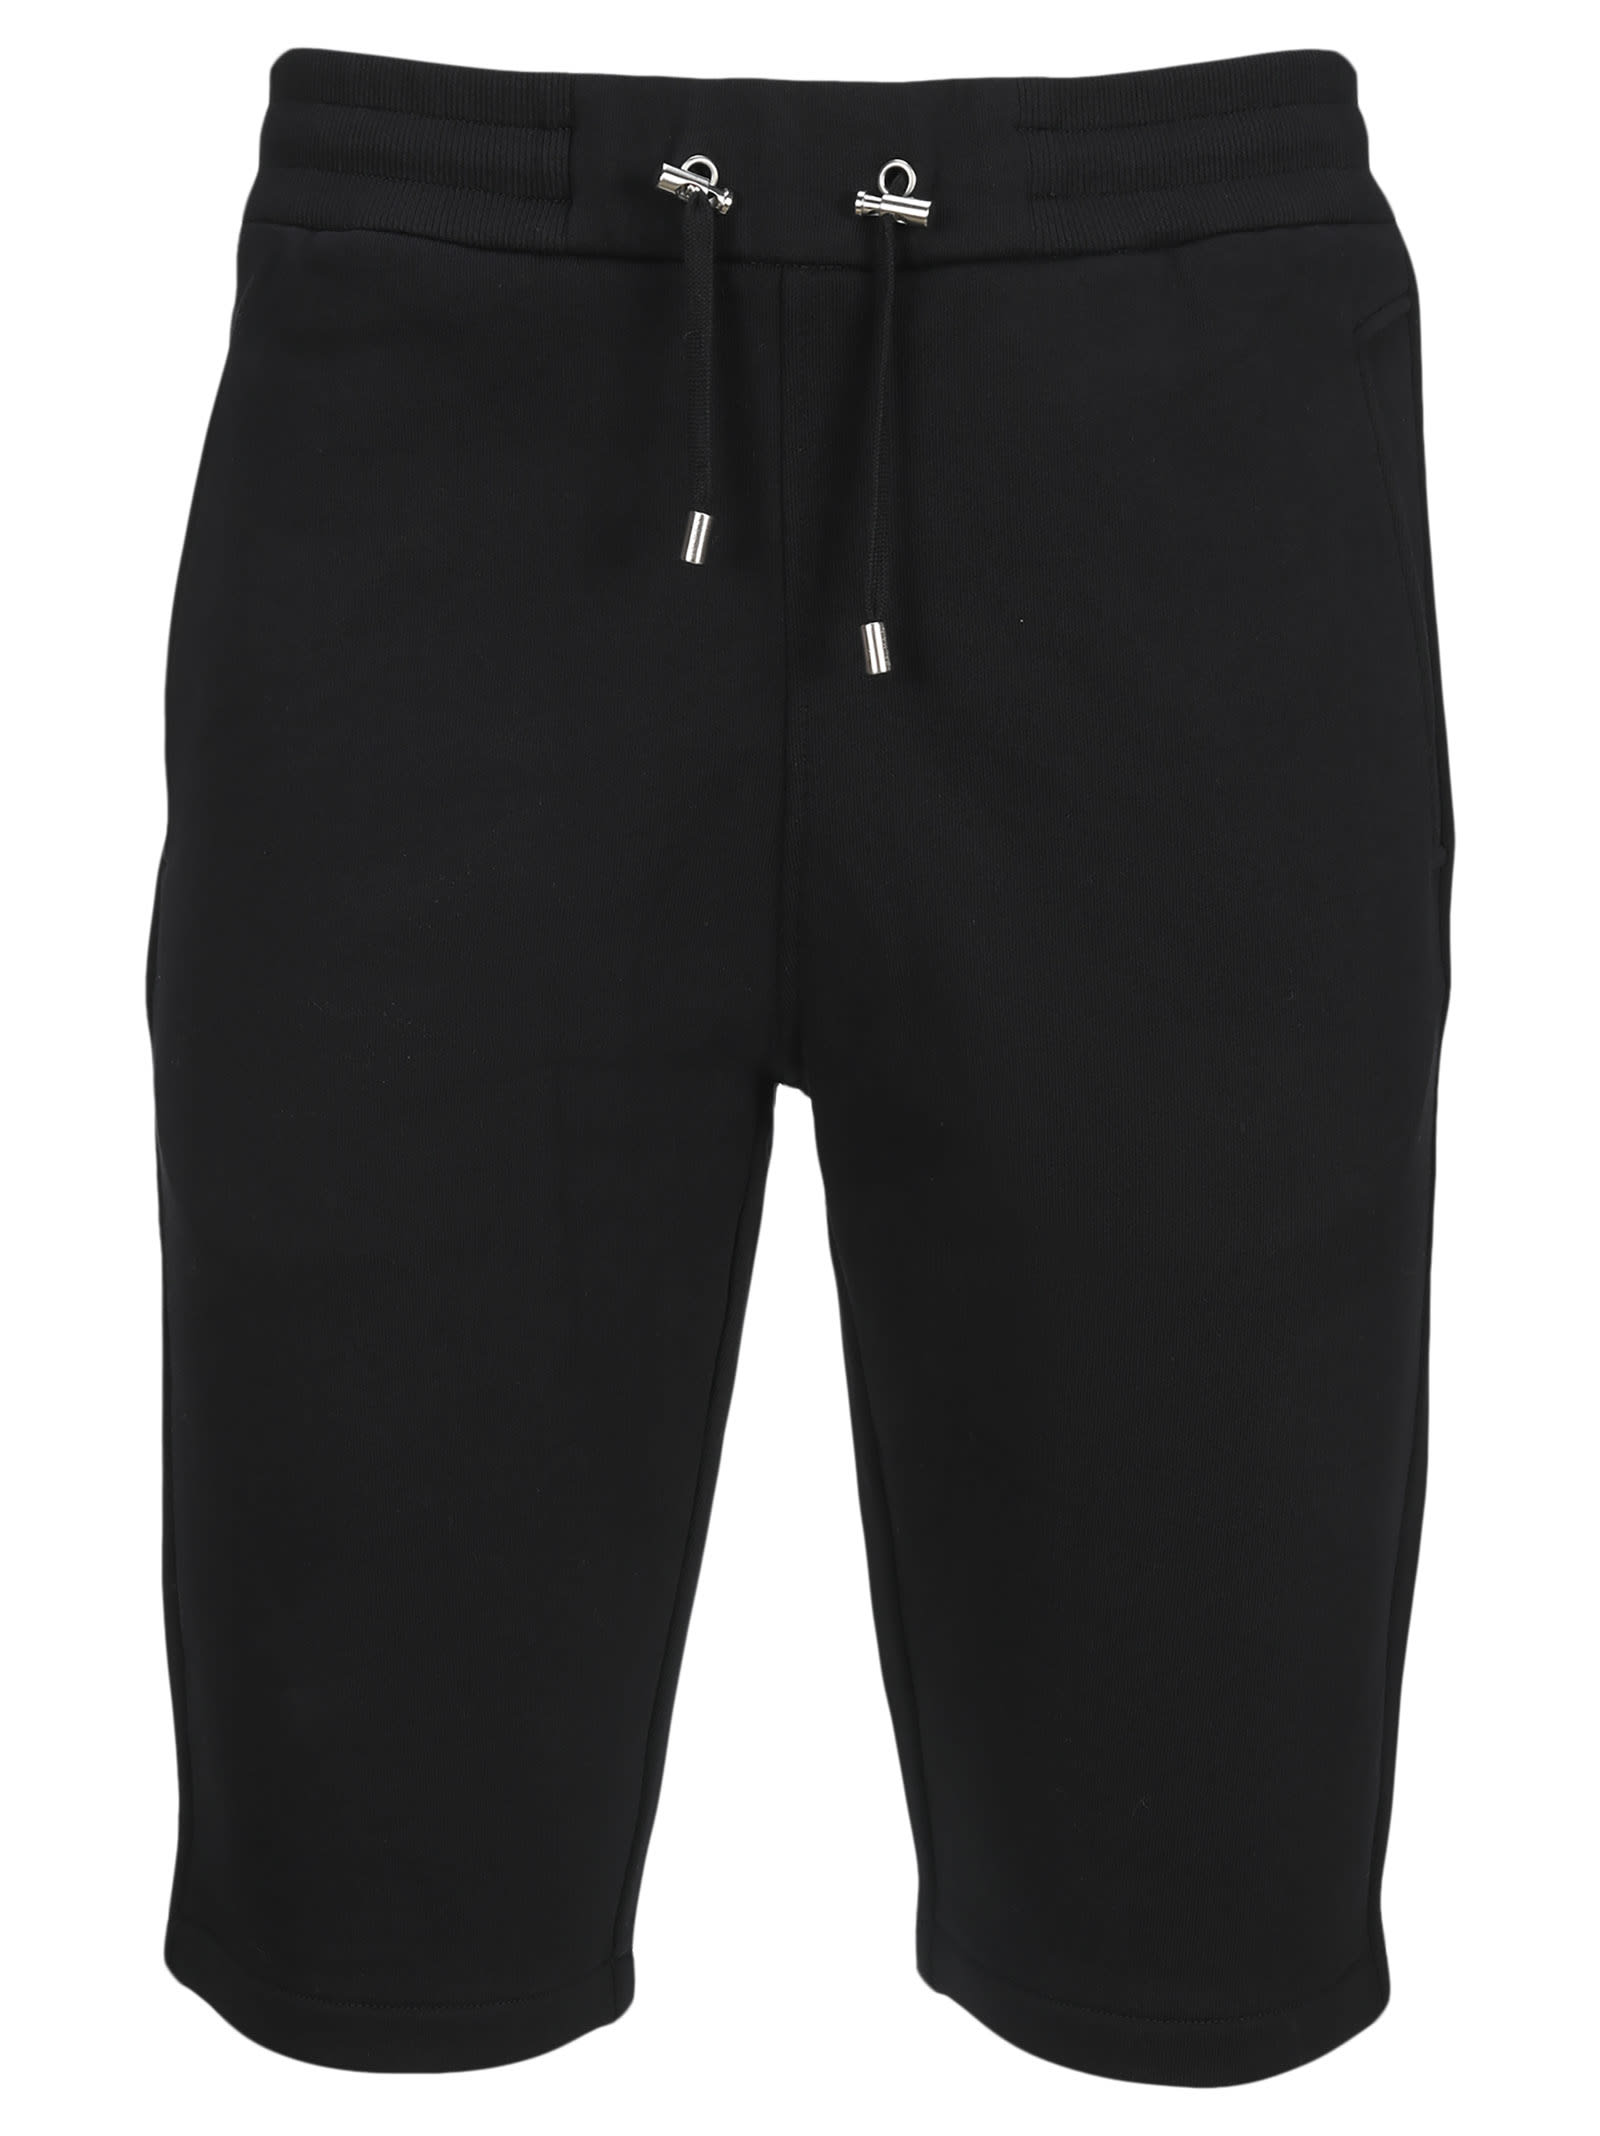 Balmain Shorts Black - Atterley | ModeSens